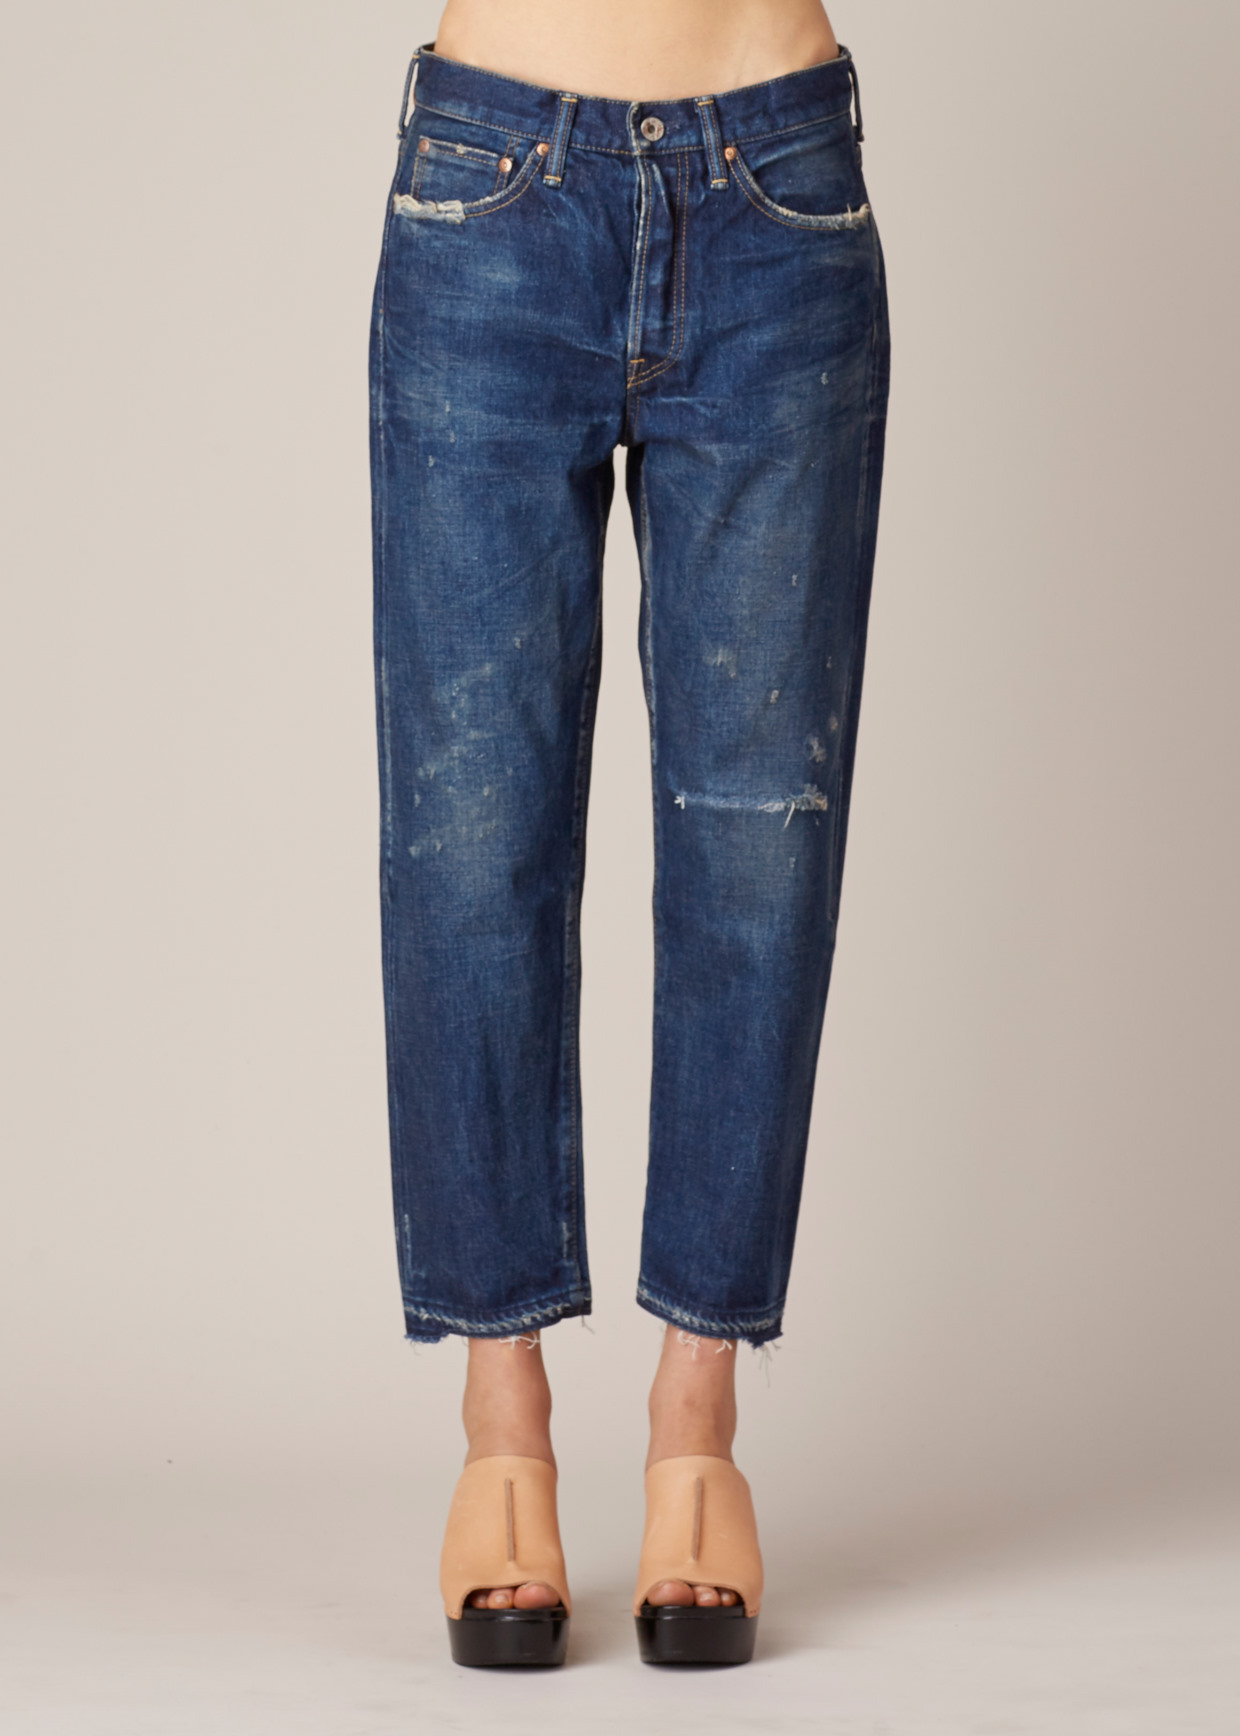 Chimala Vintage Medium Ankle Cut Jean in Blue | Lyst